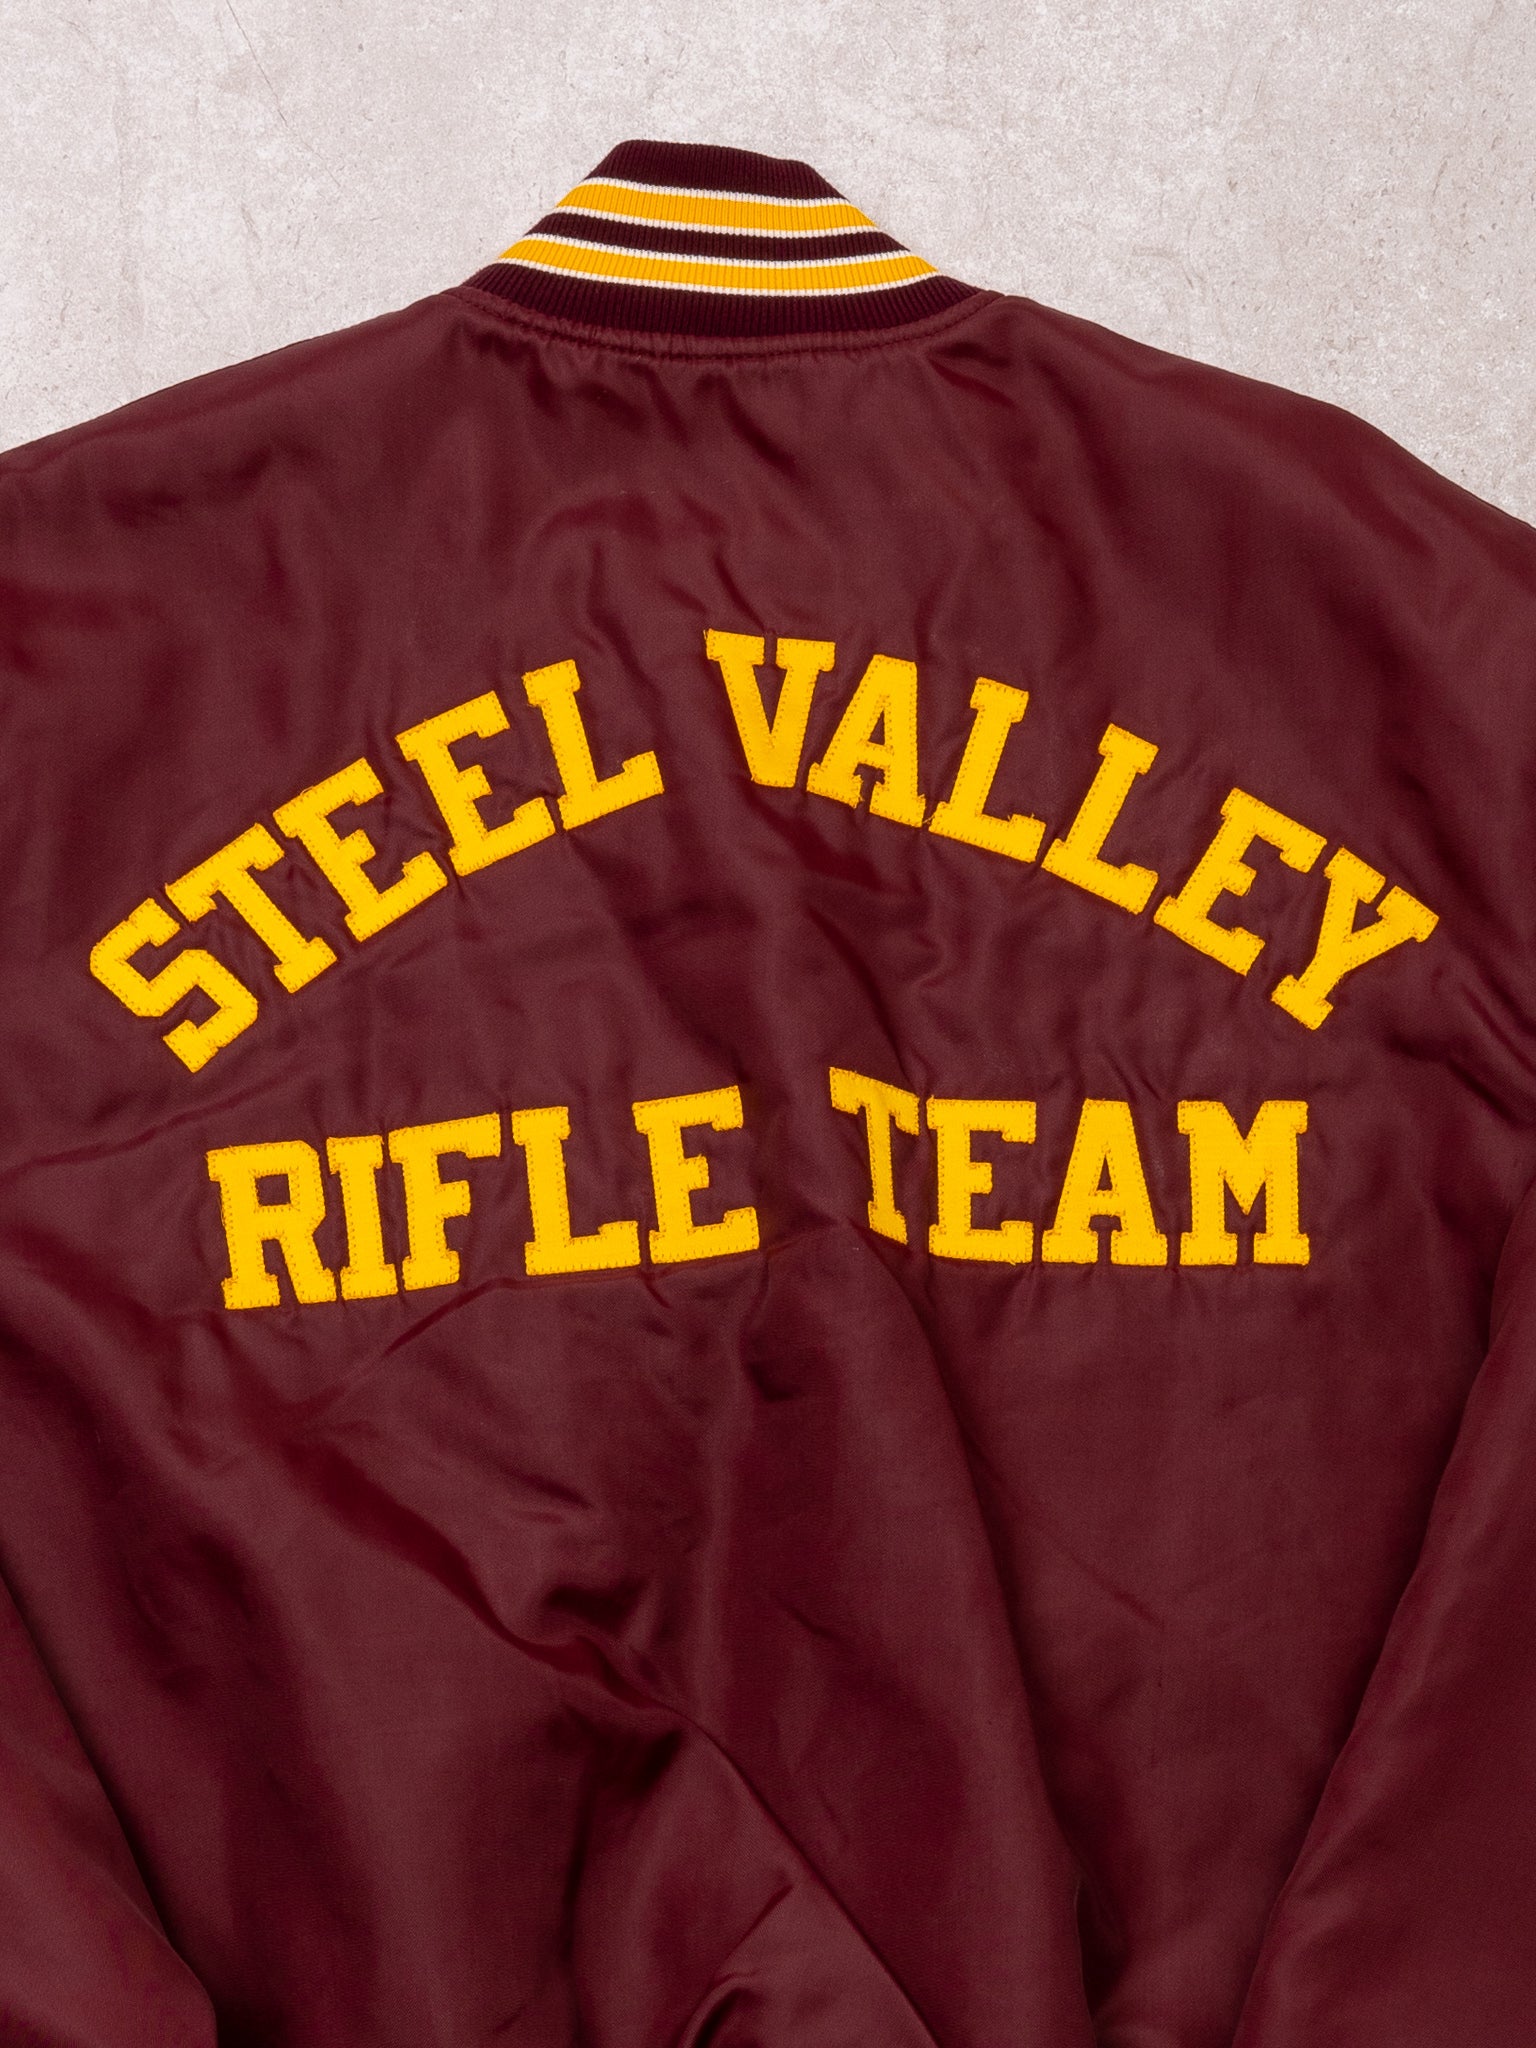 Vintage 80s Maroon + Yellow Steel Valley Rifle Team Nylon Bomber Jacket (L)